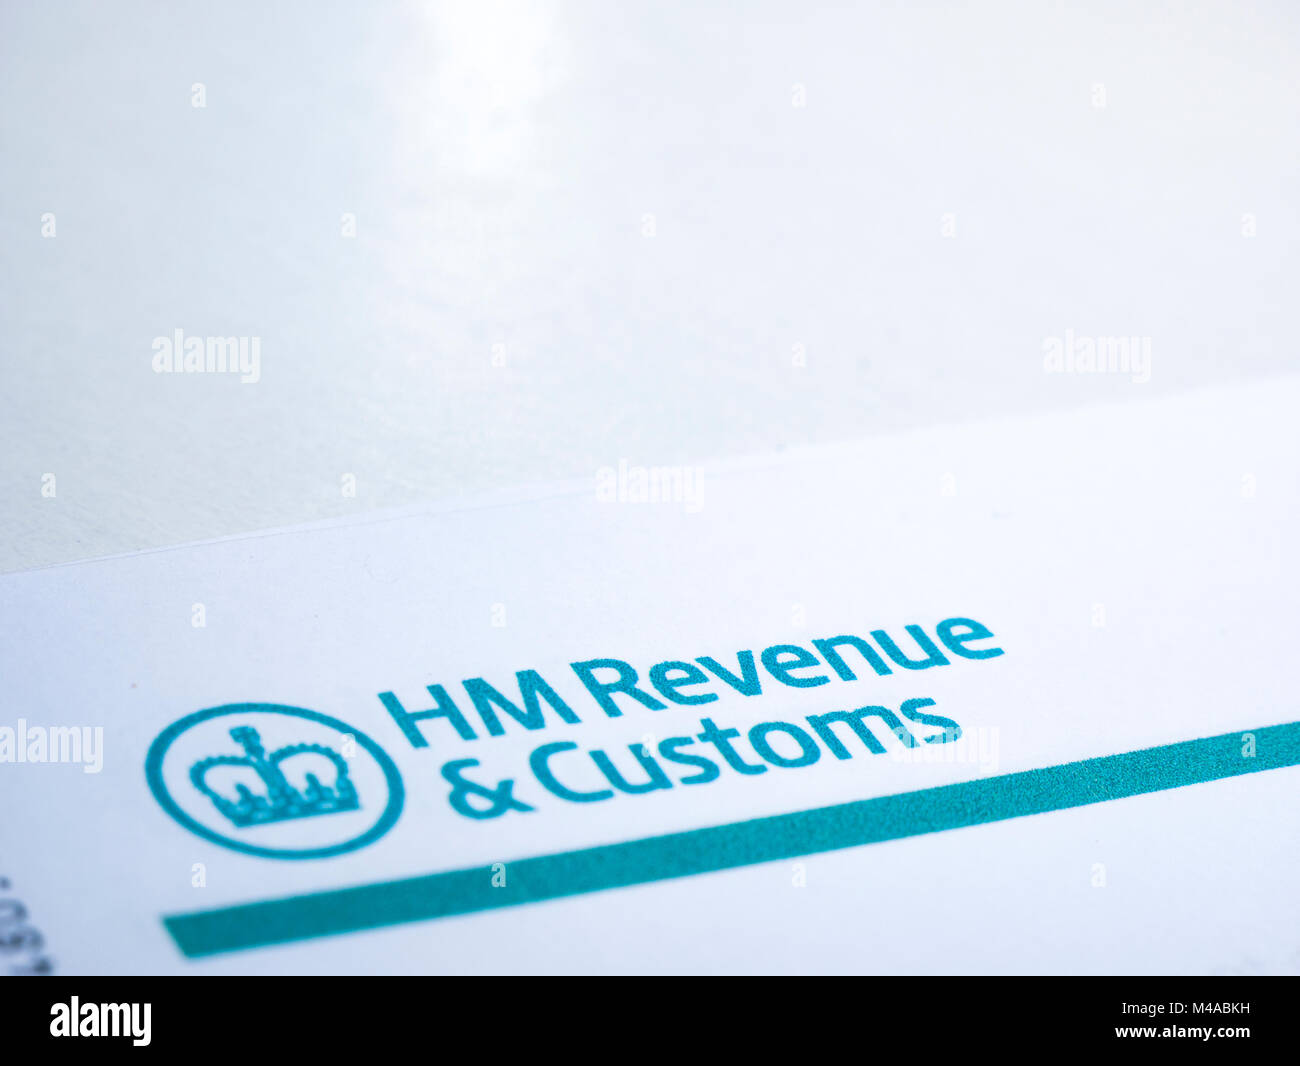 HMRC Letterhead logo Stock Photo